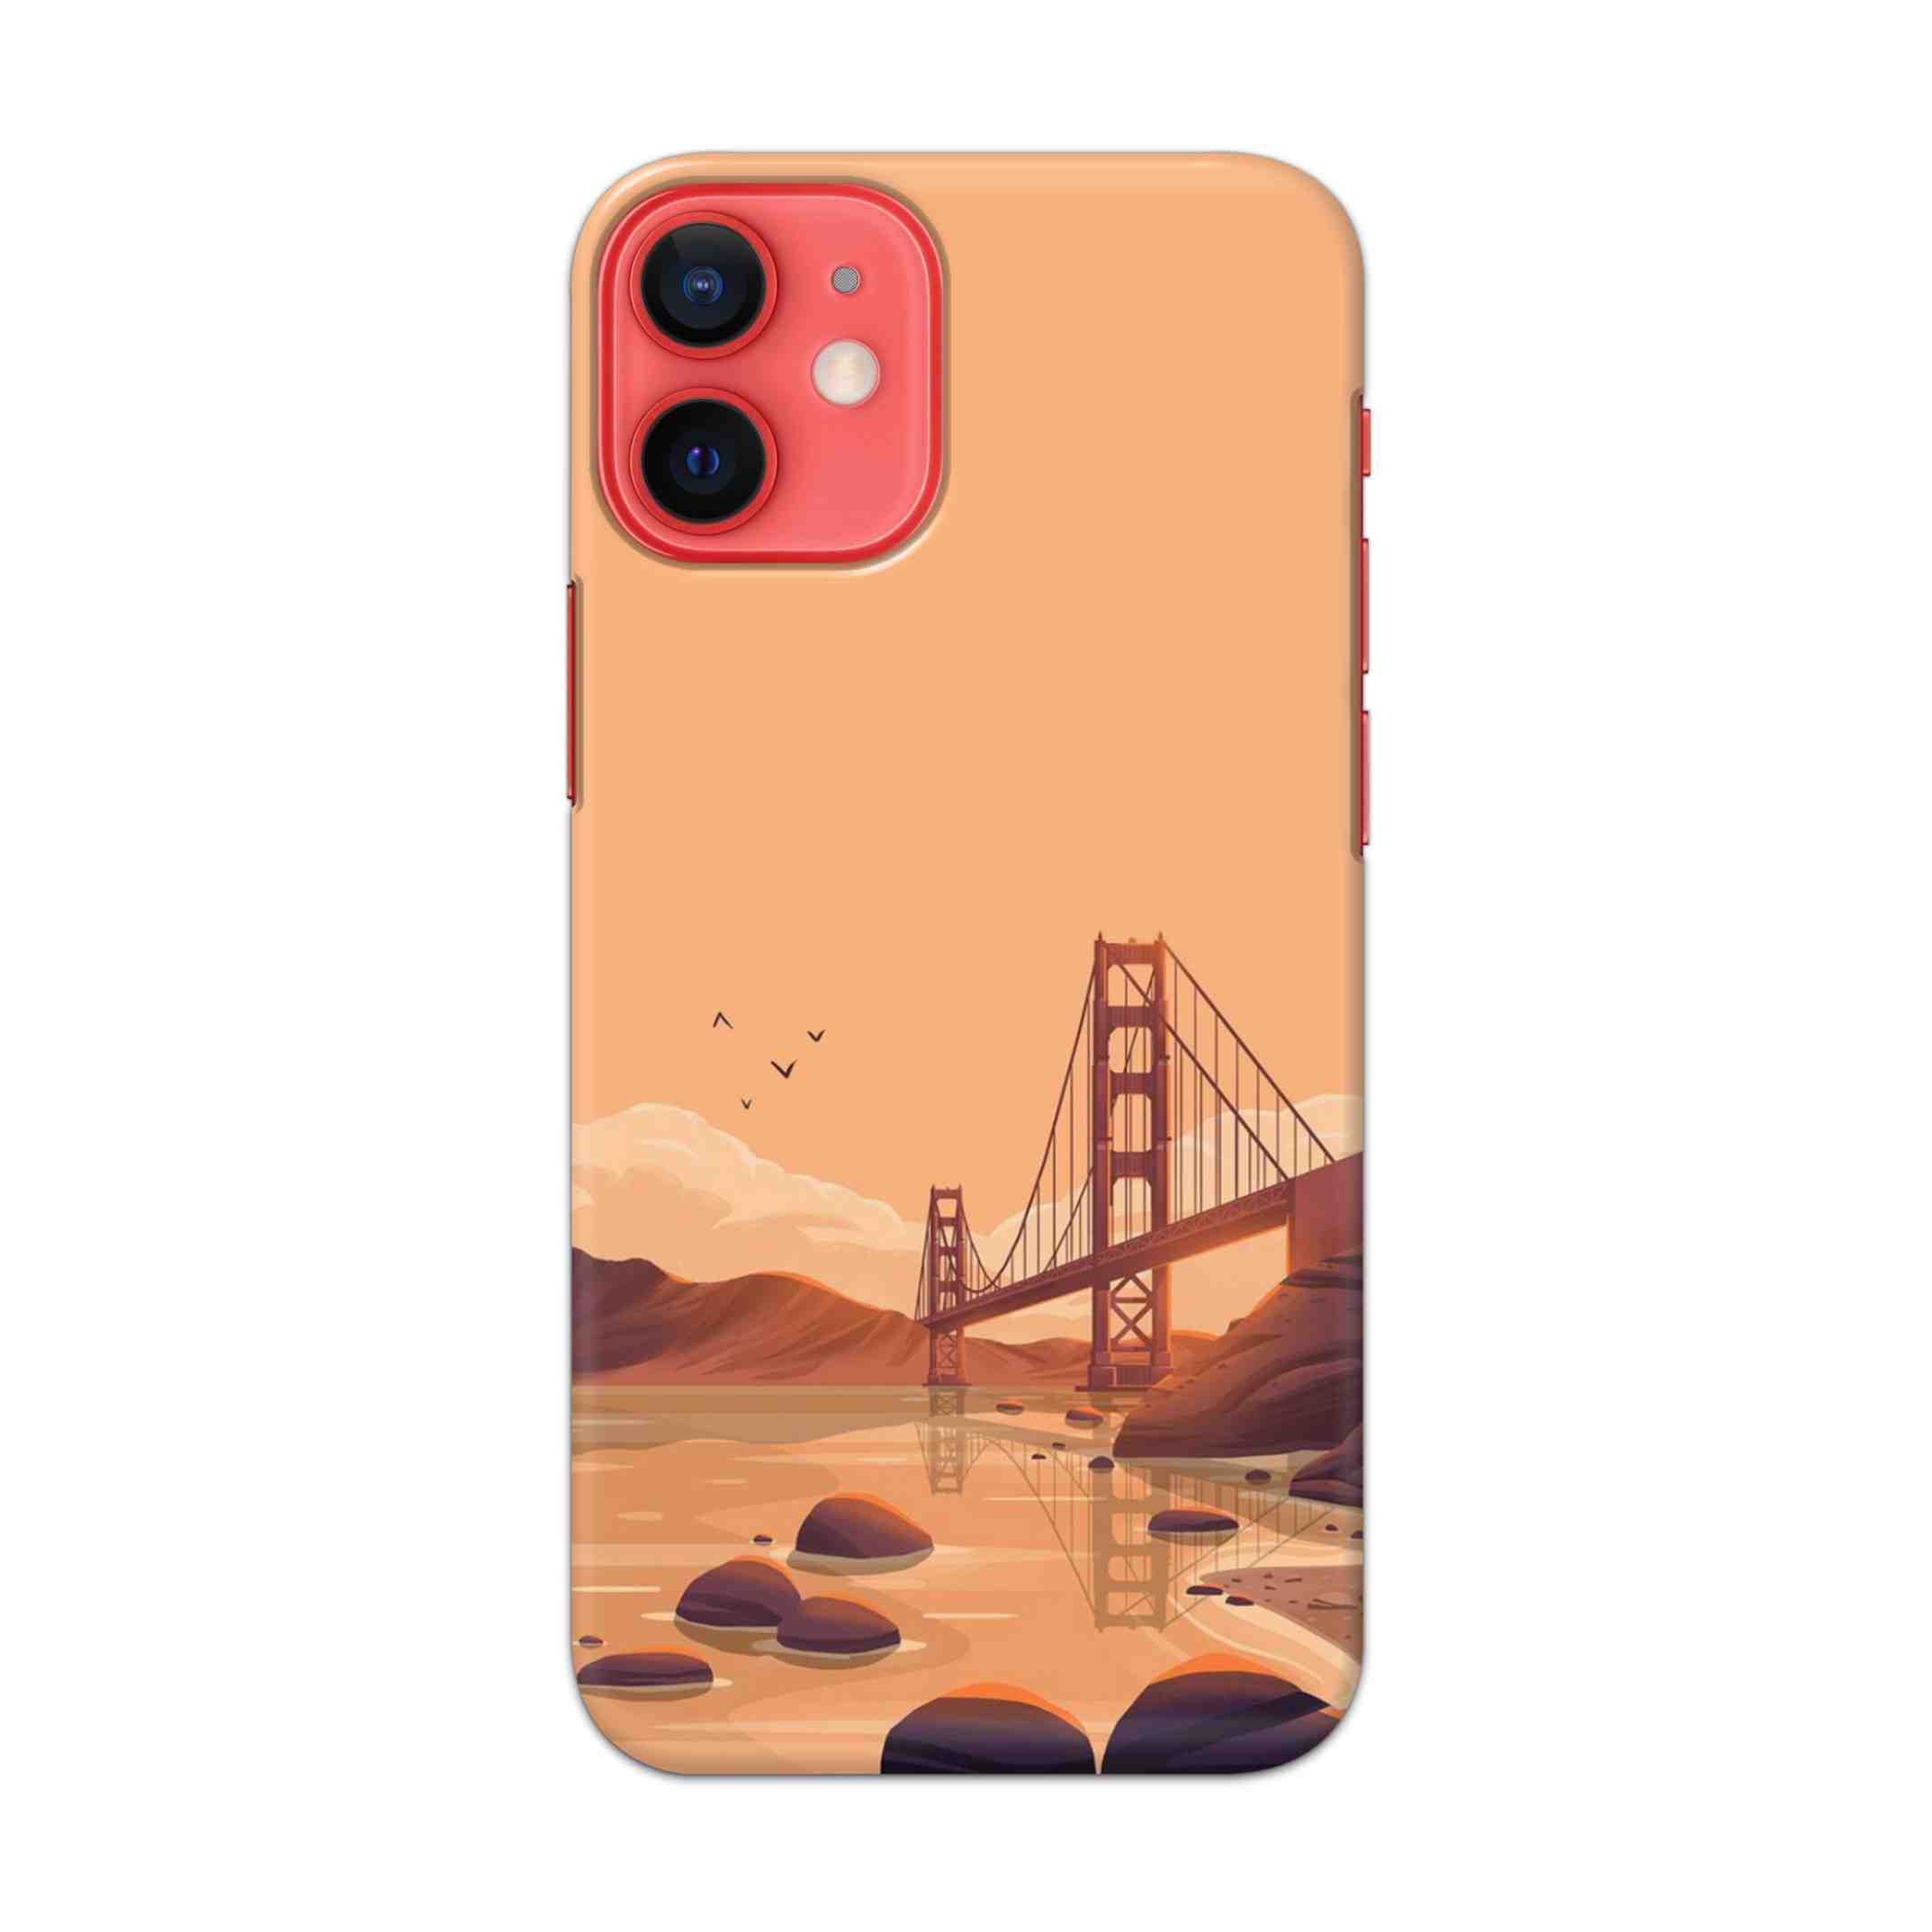 Buy San Fransisco Hard Back Mobile Phone Case/Cover For Apple iPhone 12 mini Online